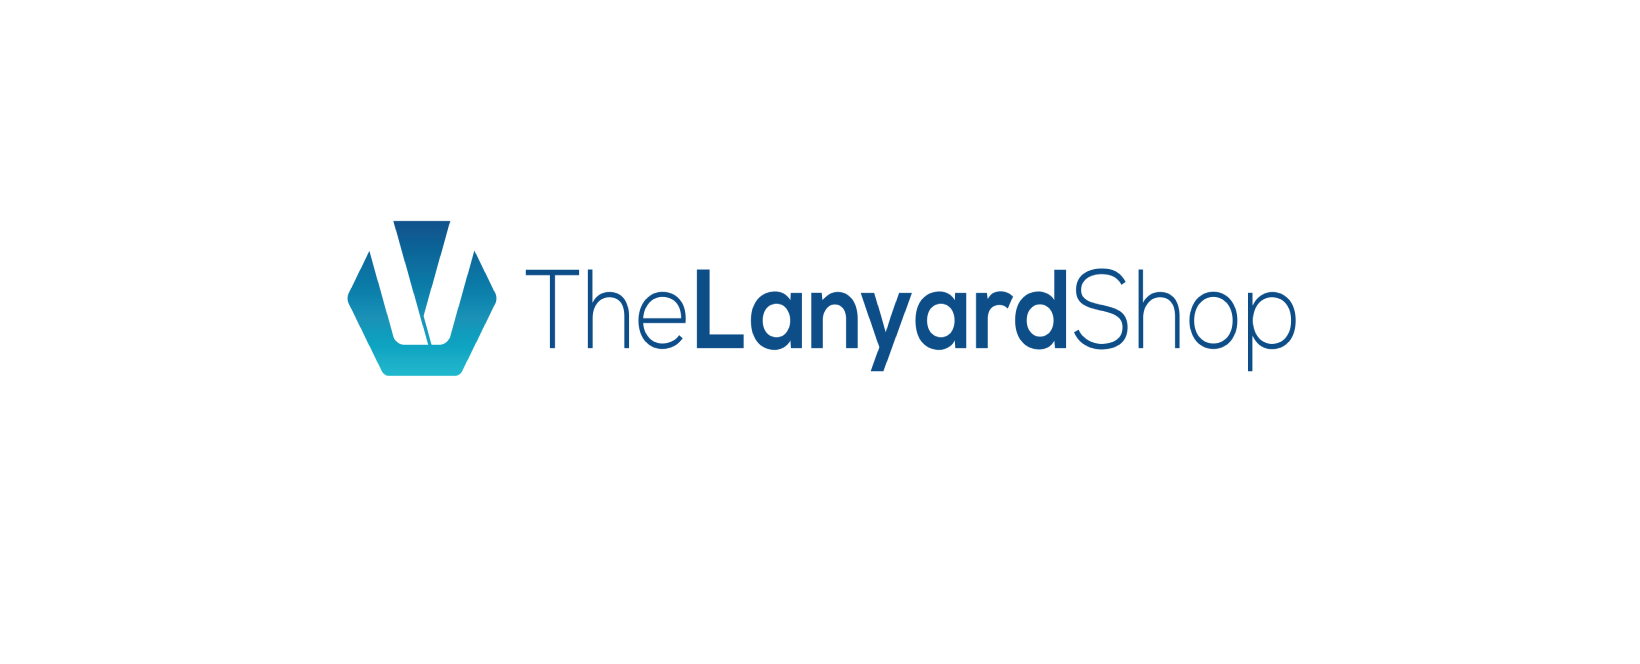 The Lanyard Shop Discount Code 2022